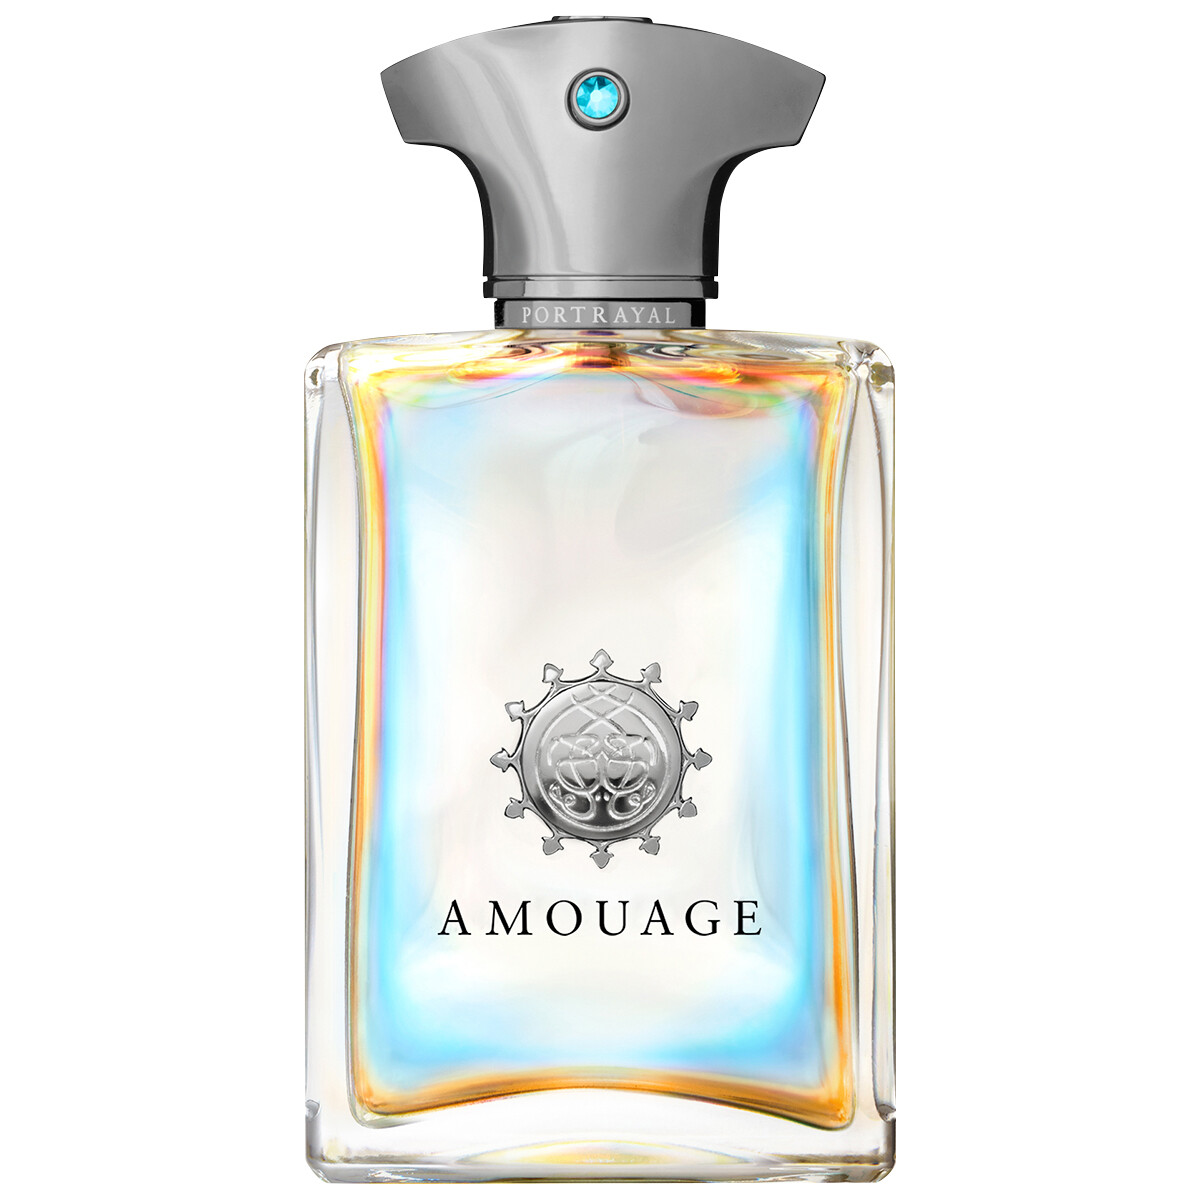 Luxus Parfum Amouage Portrayal Man EDP 100ml kaufen